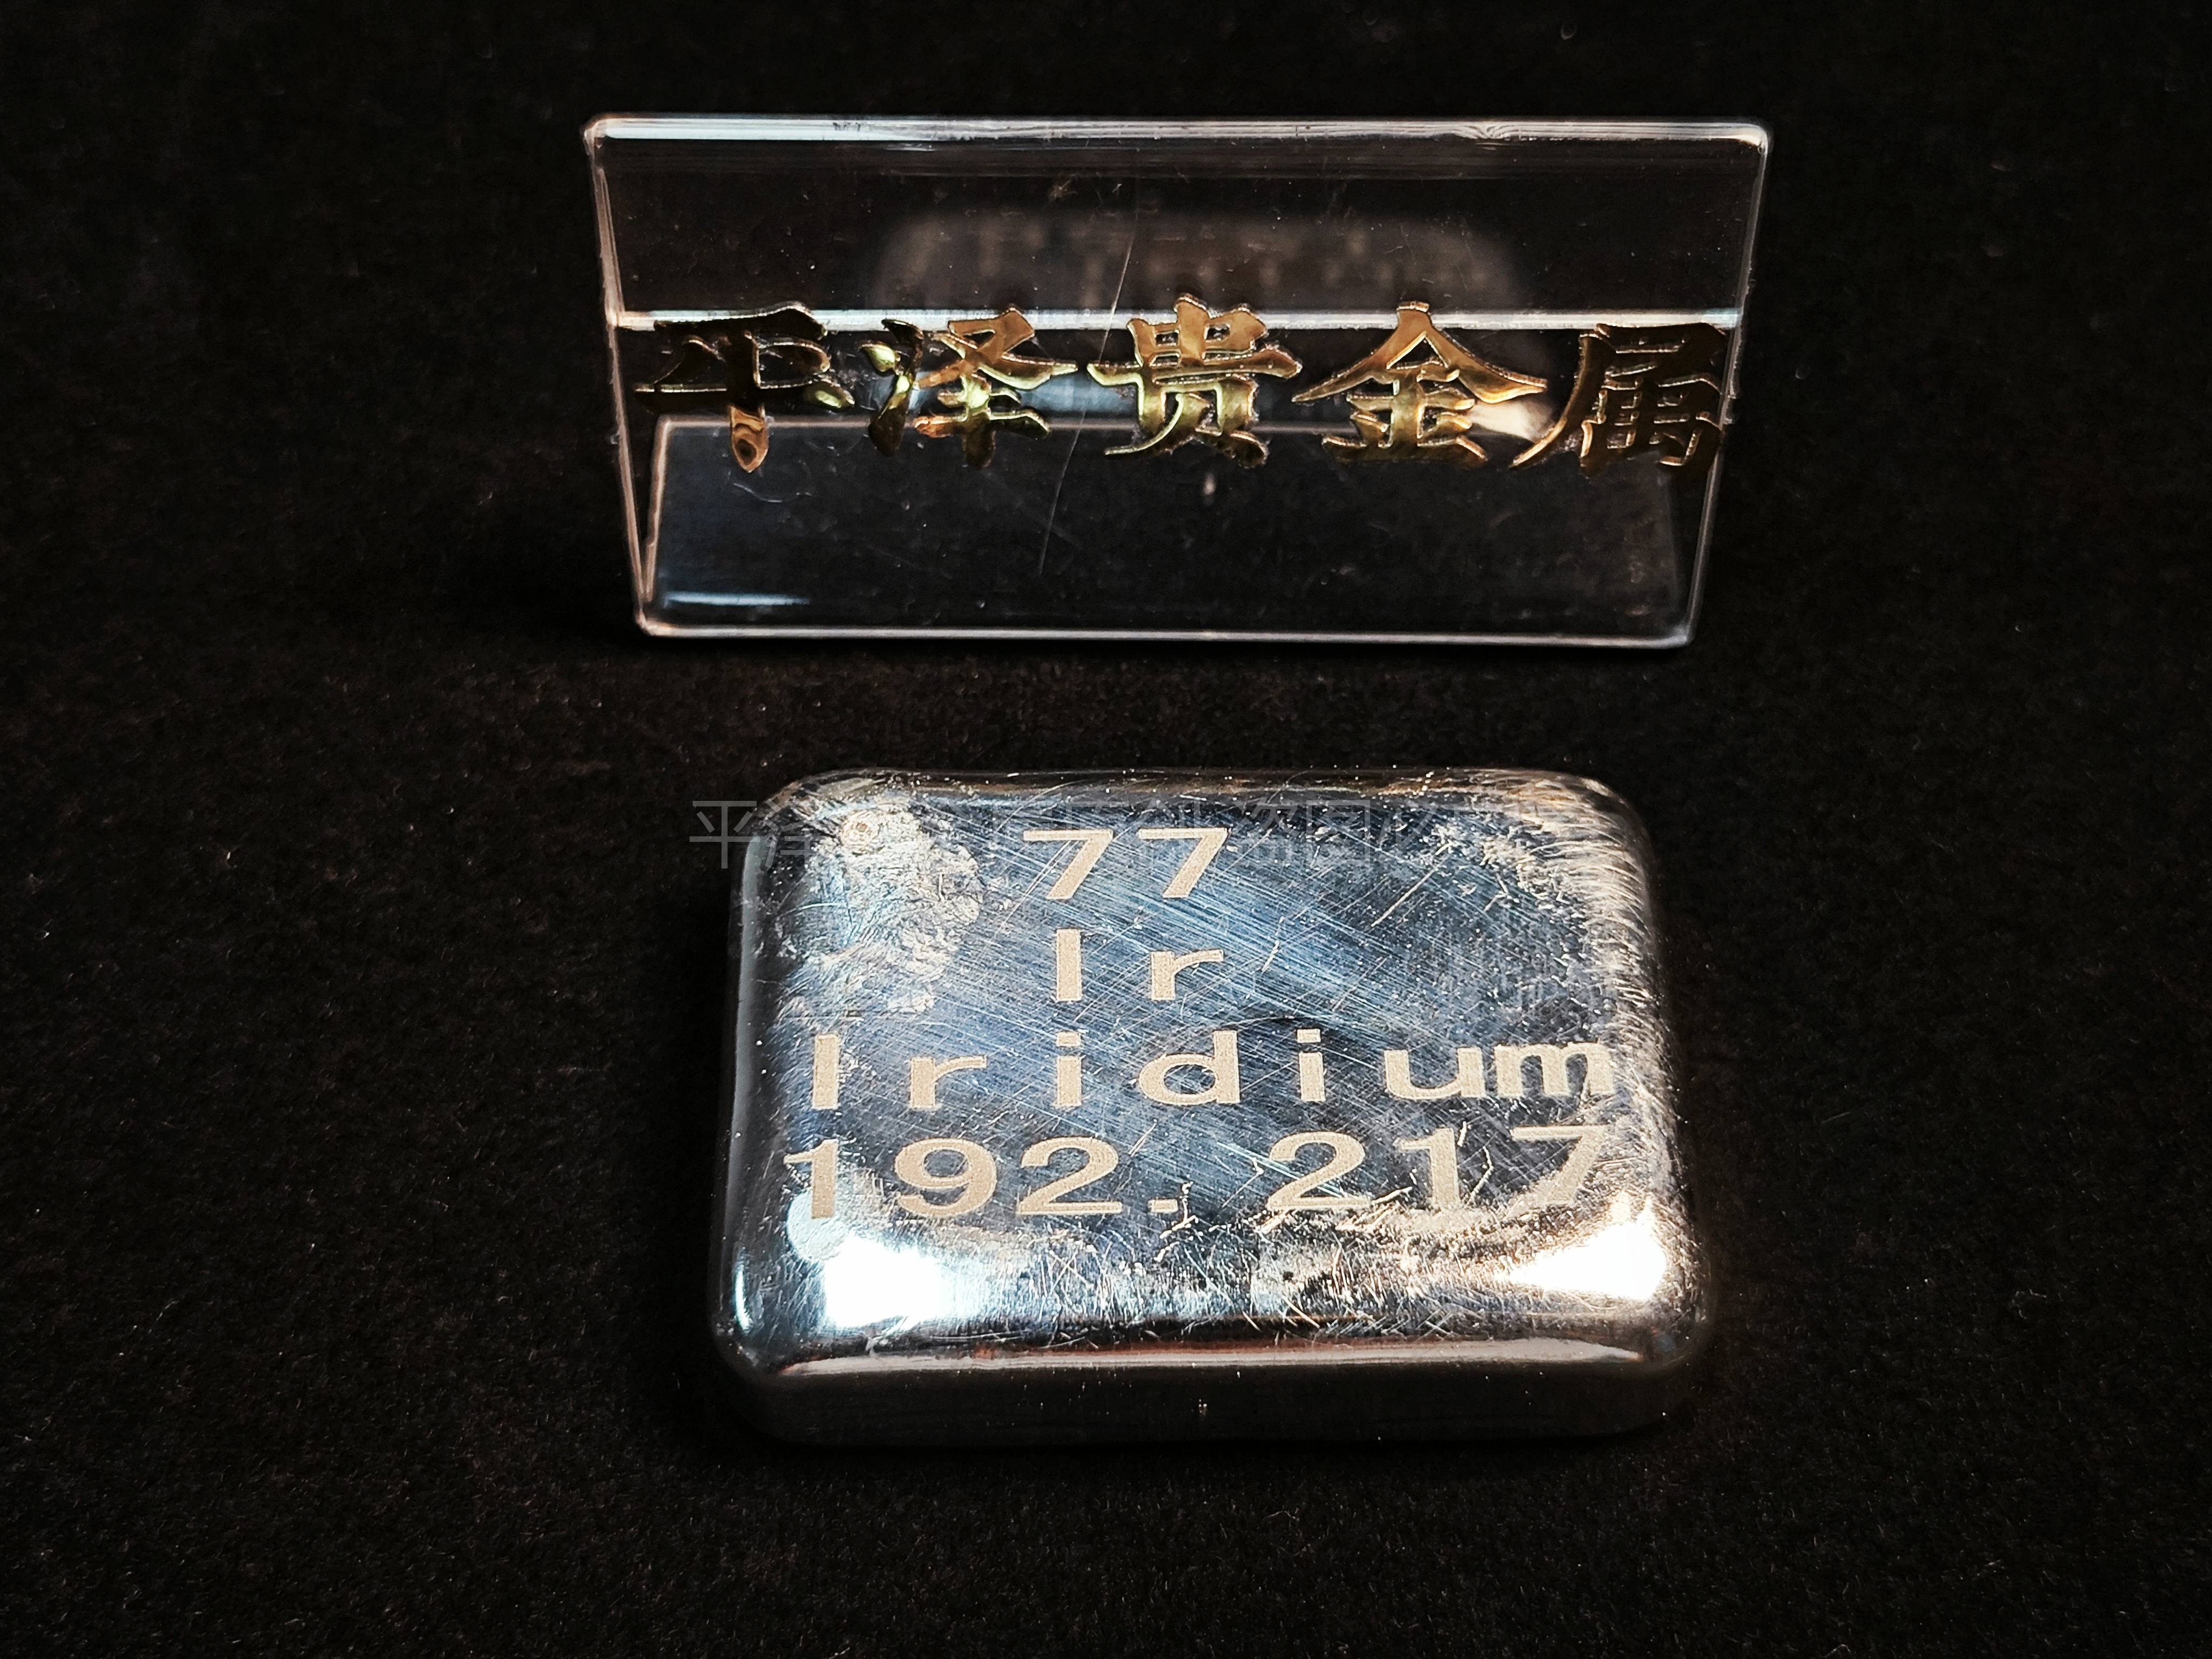 Who owns the iridium? The value and application of iridium.